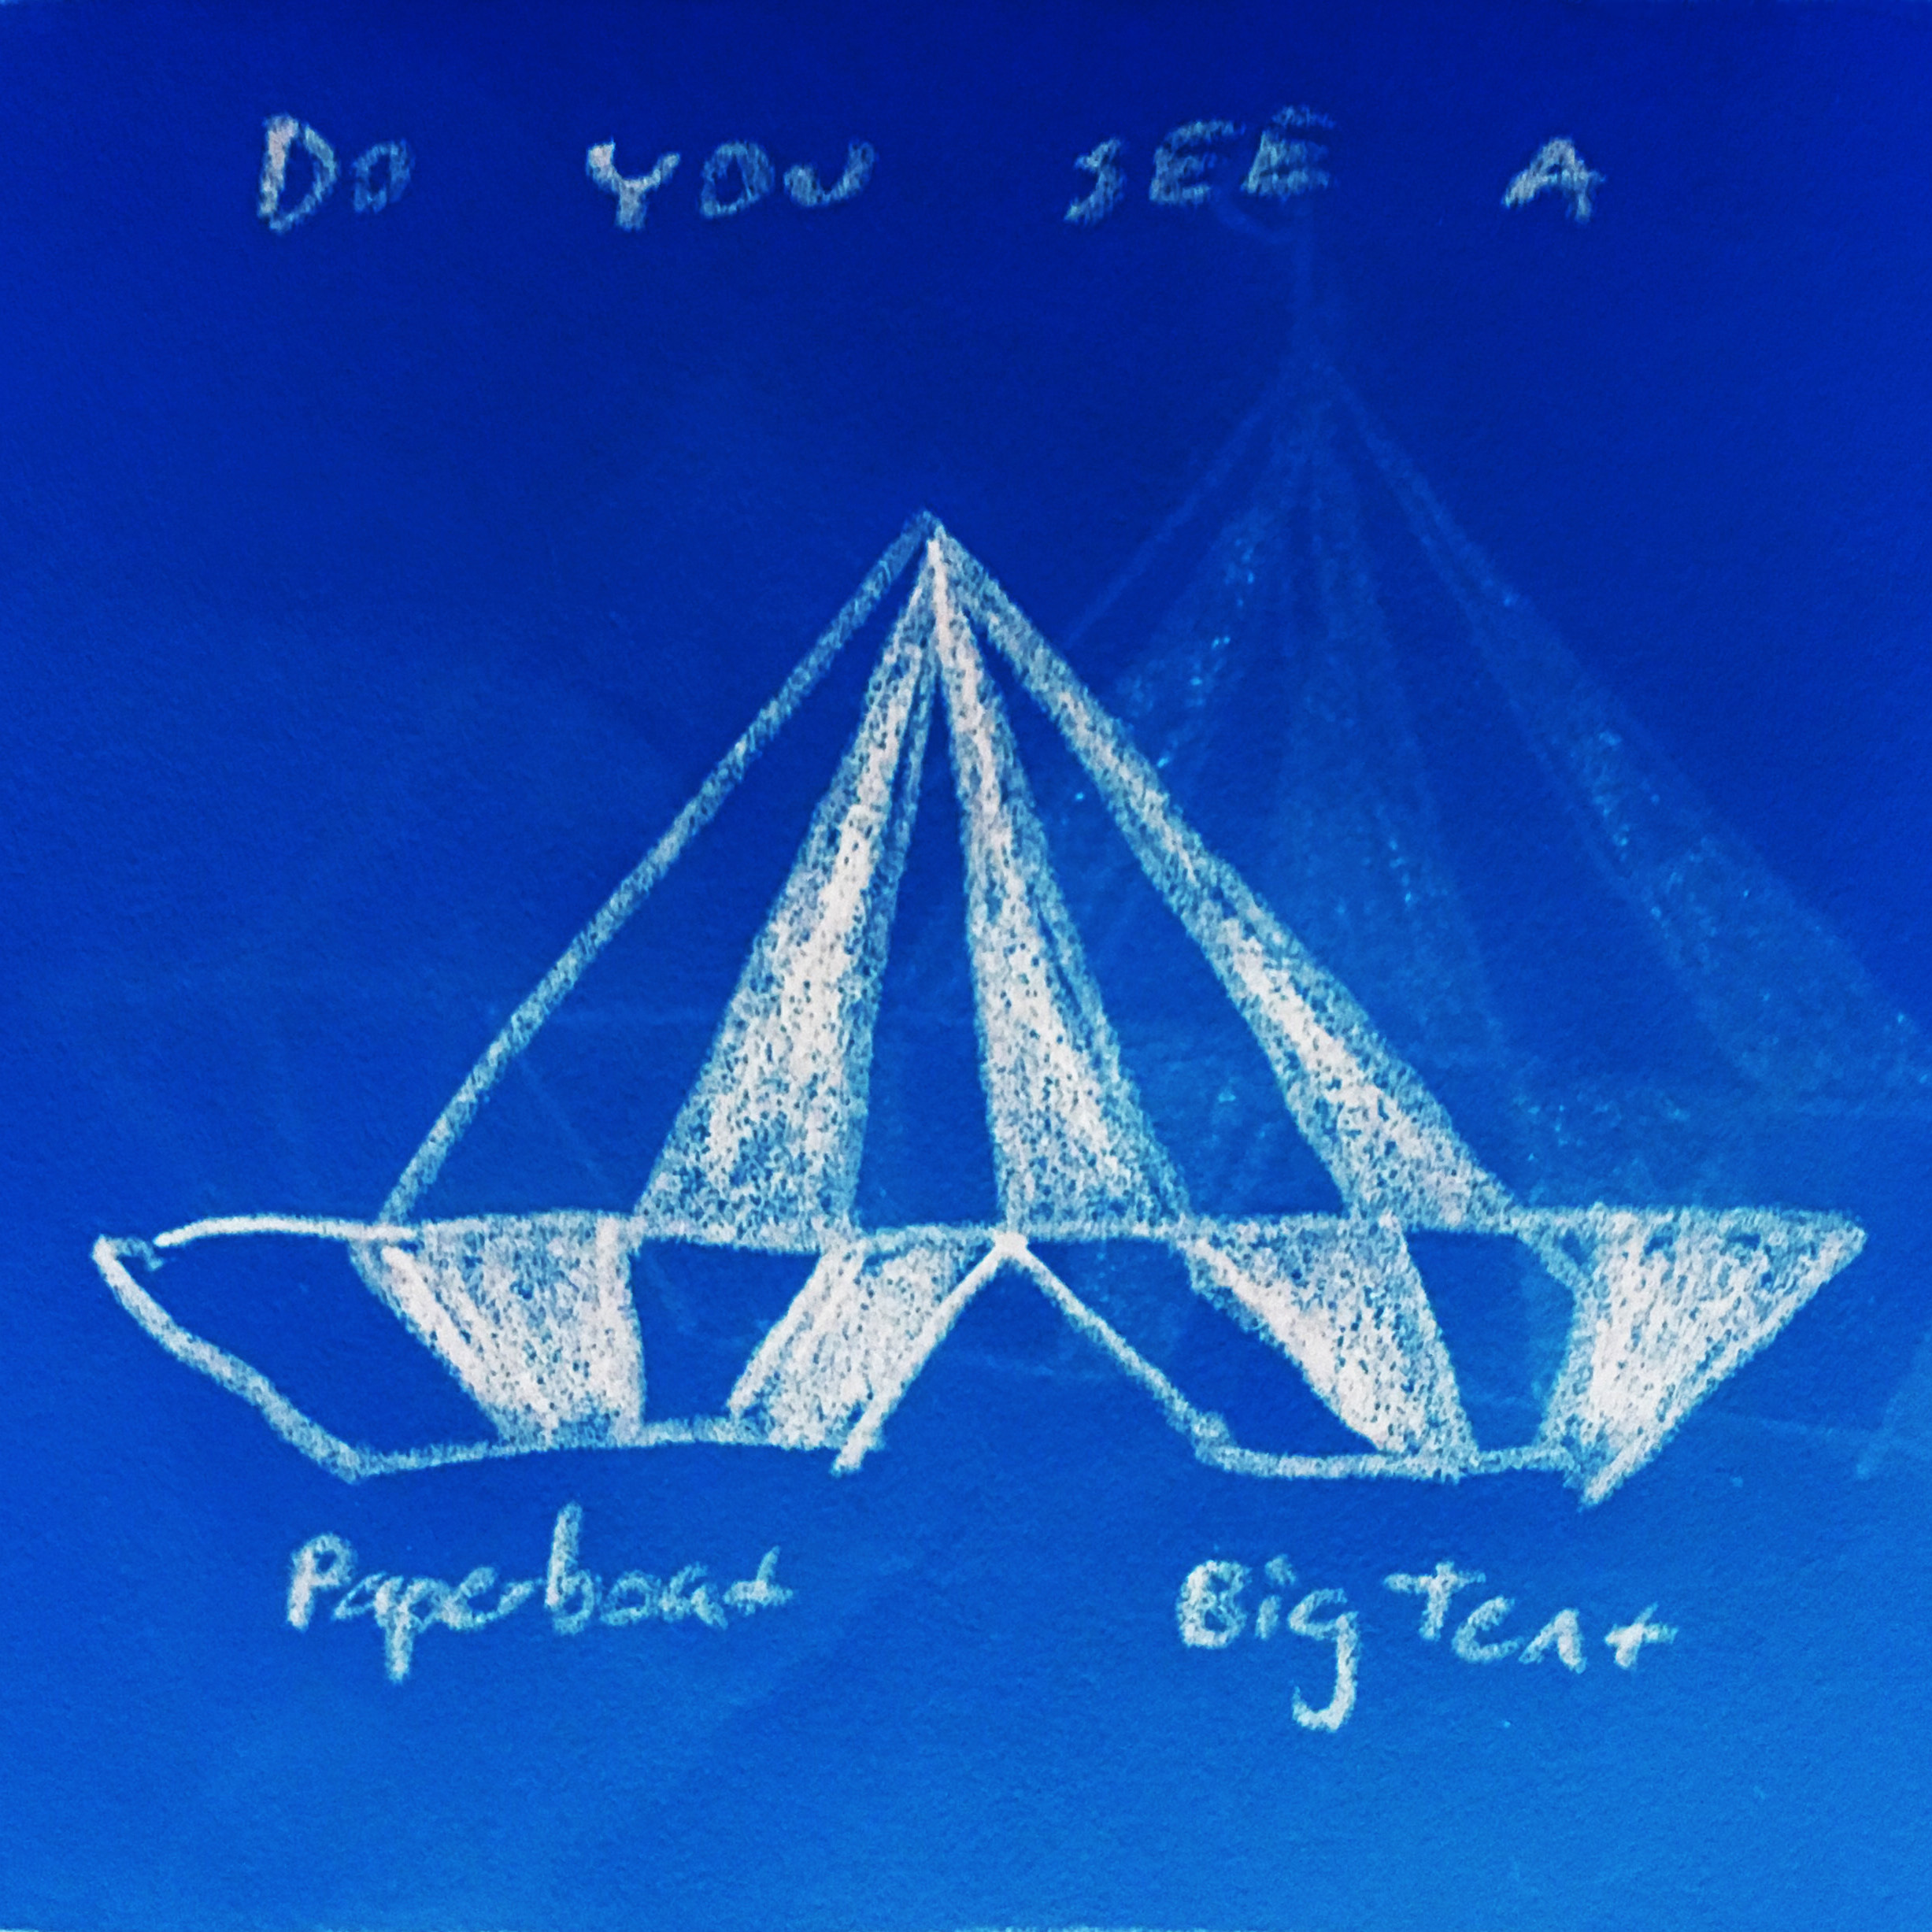 Paperboat - Big Tent